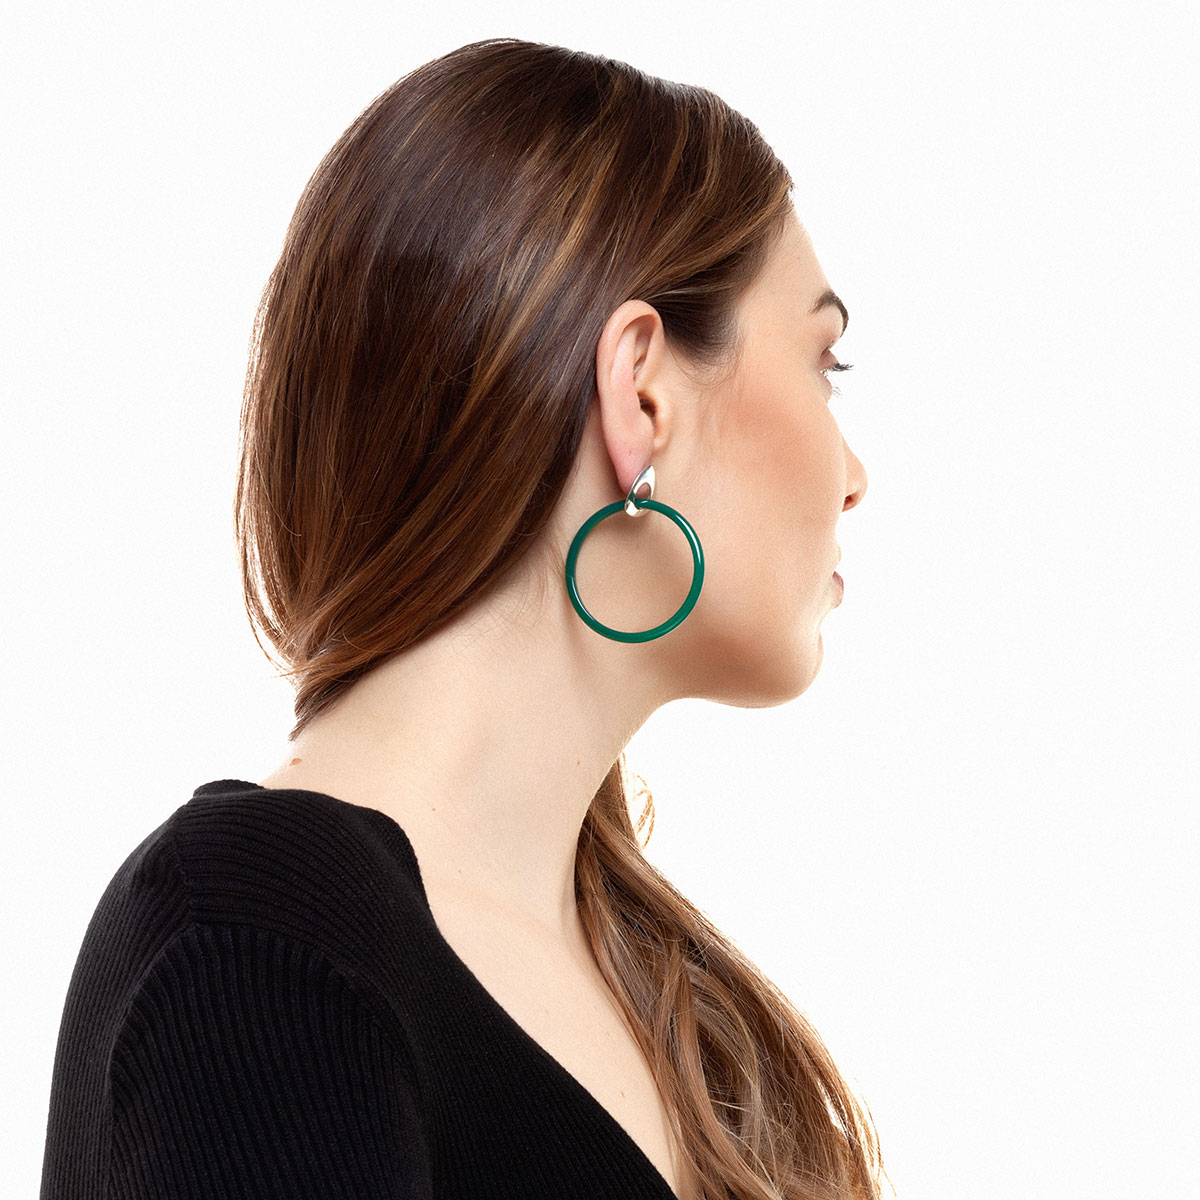 handmade Lya earrings in sterling silver and green agate designed by Belen Bajo